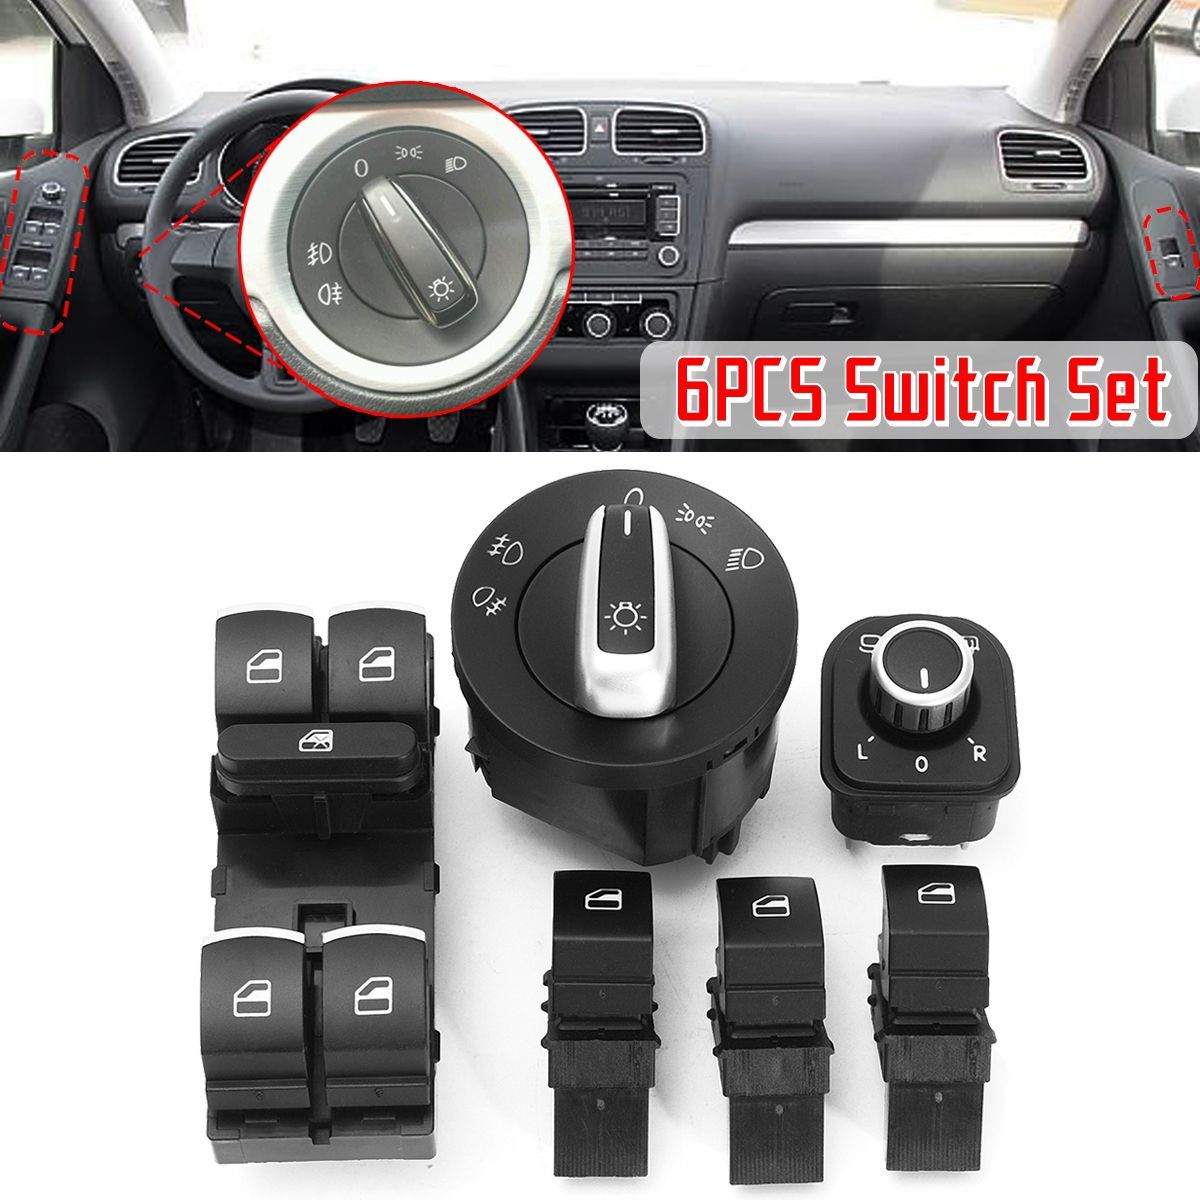 6PCS-Chrome-Window-Mirror-Headlight-Switch-Control-For-VW-Passat-Golf-Jetta-Tiguan-Touran-1373562